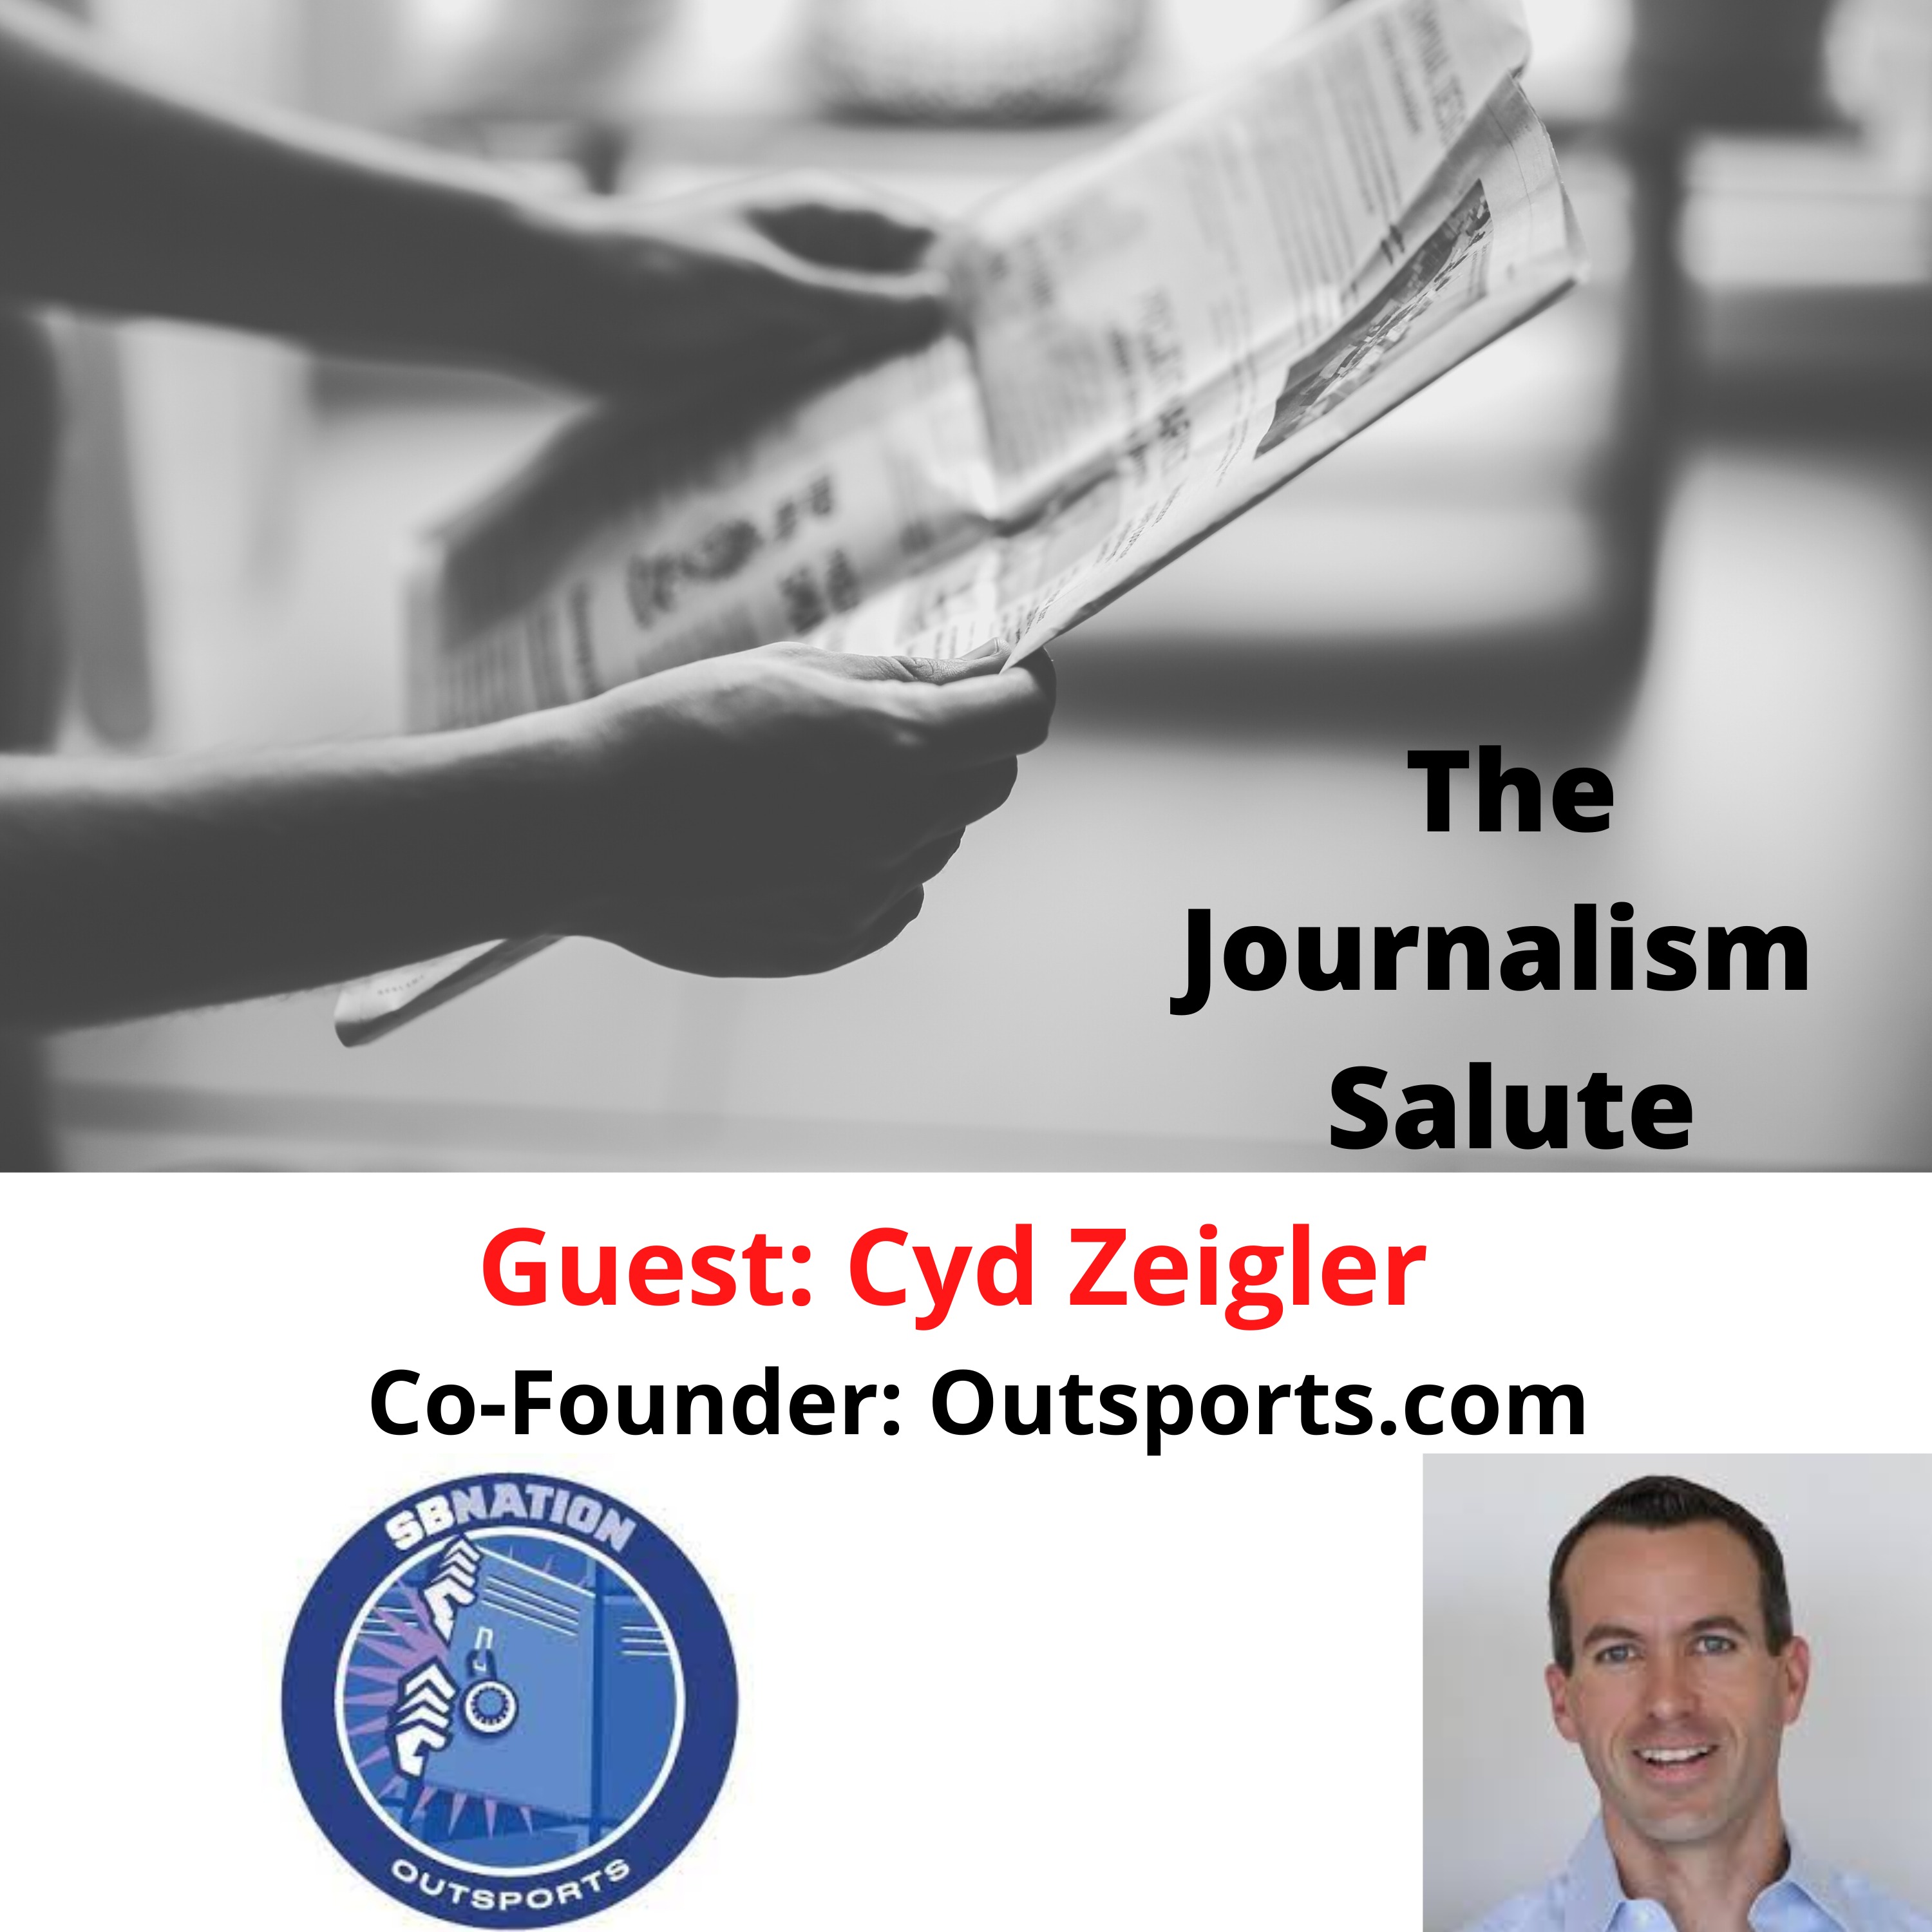 Cyd Zeigler, Co-Founder, Outsports.com